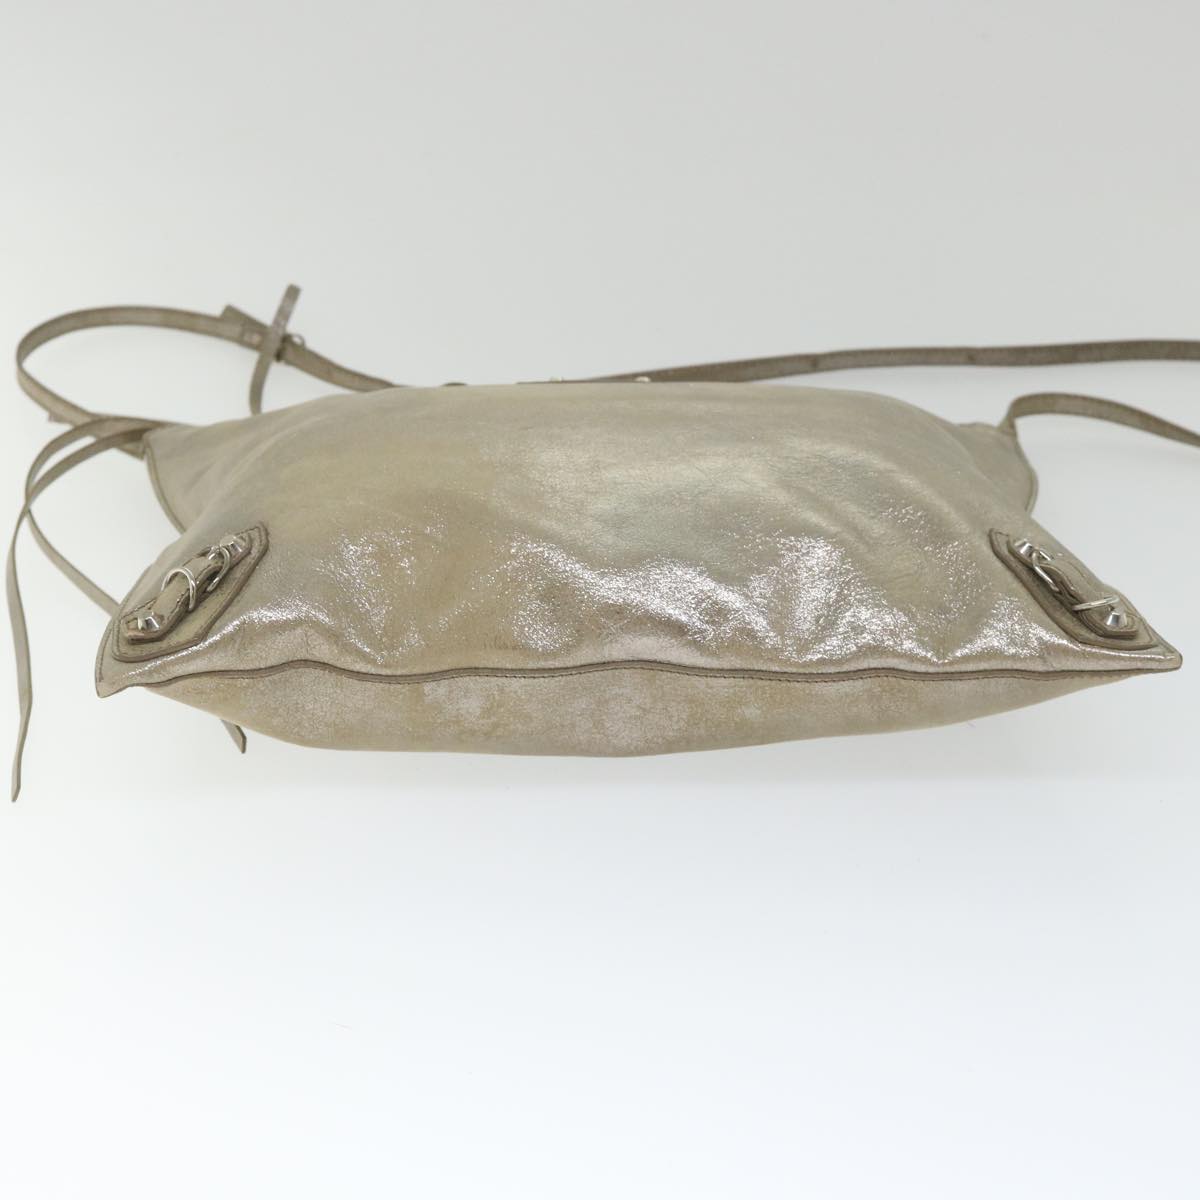 BALENCIAGA Shoulder Bag Leather Gold 253454 Auth bs8766